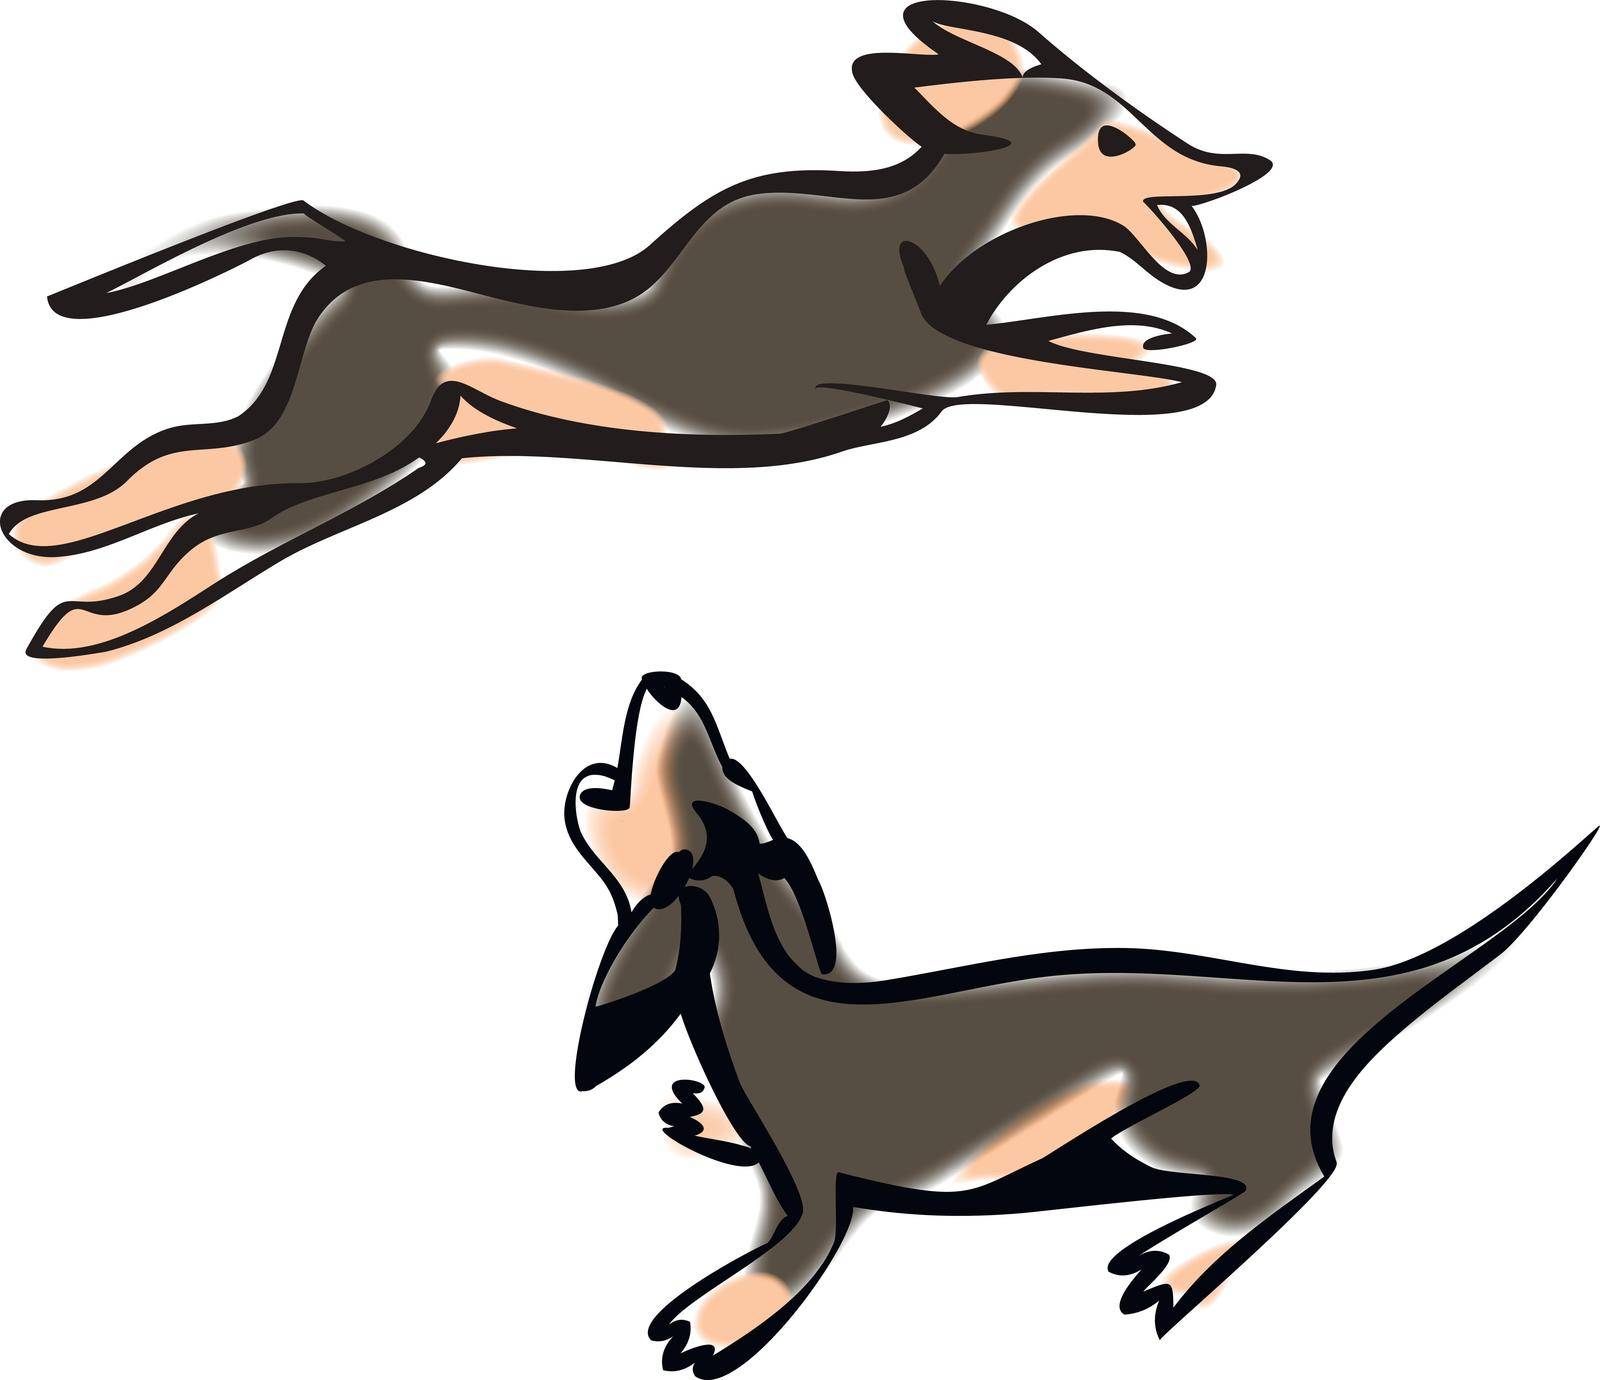 Cartoon Vector Illustration of Cute Purebred Dachshund Dog by kajasja